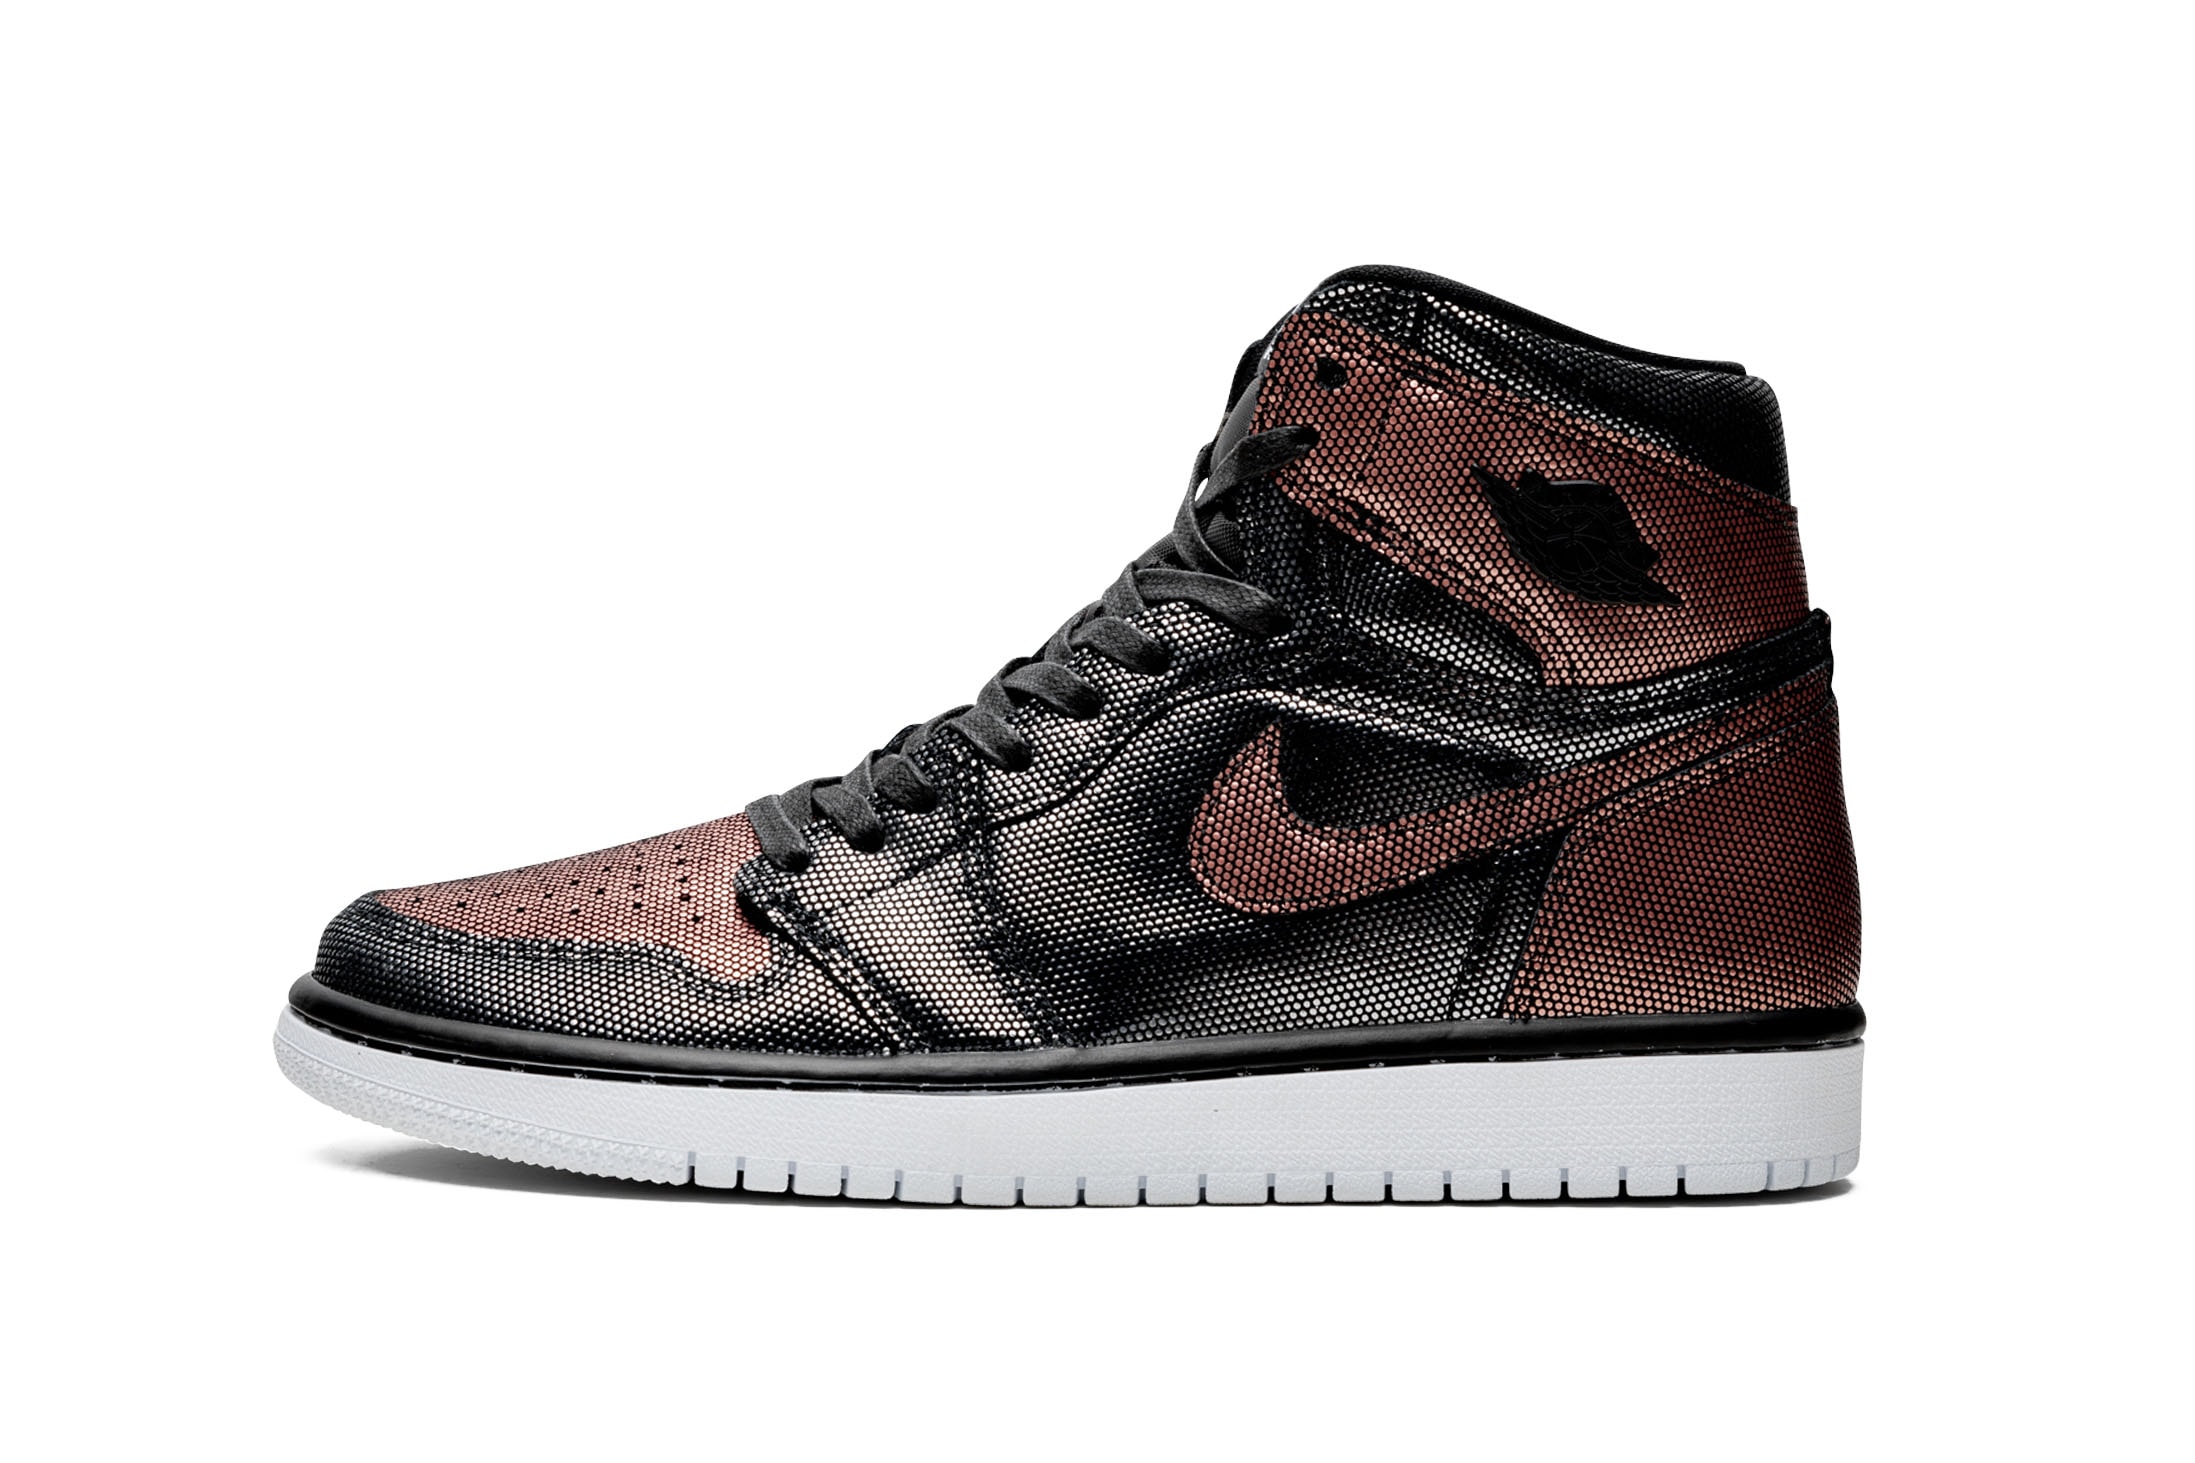 Nike Air Jordan 1 Hi "Fearless" Release Date Women's Exclusive Red Black Texture Holiday 2019 Sneaker Shoe Trainer Drop